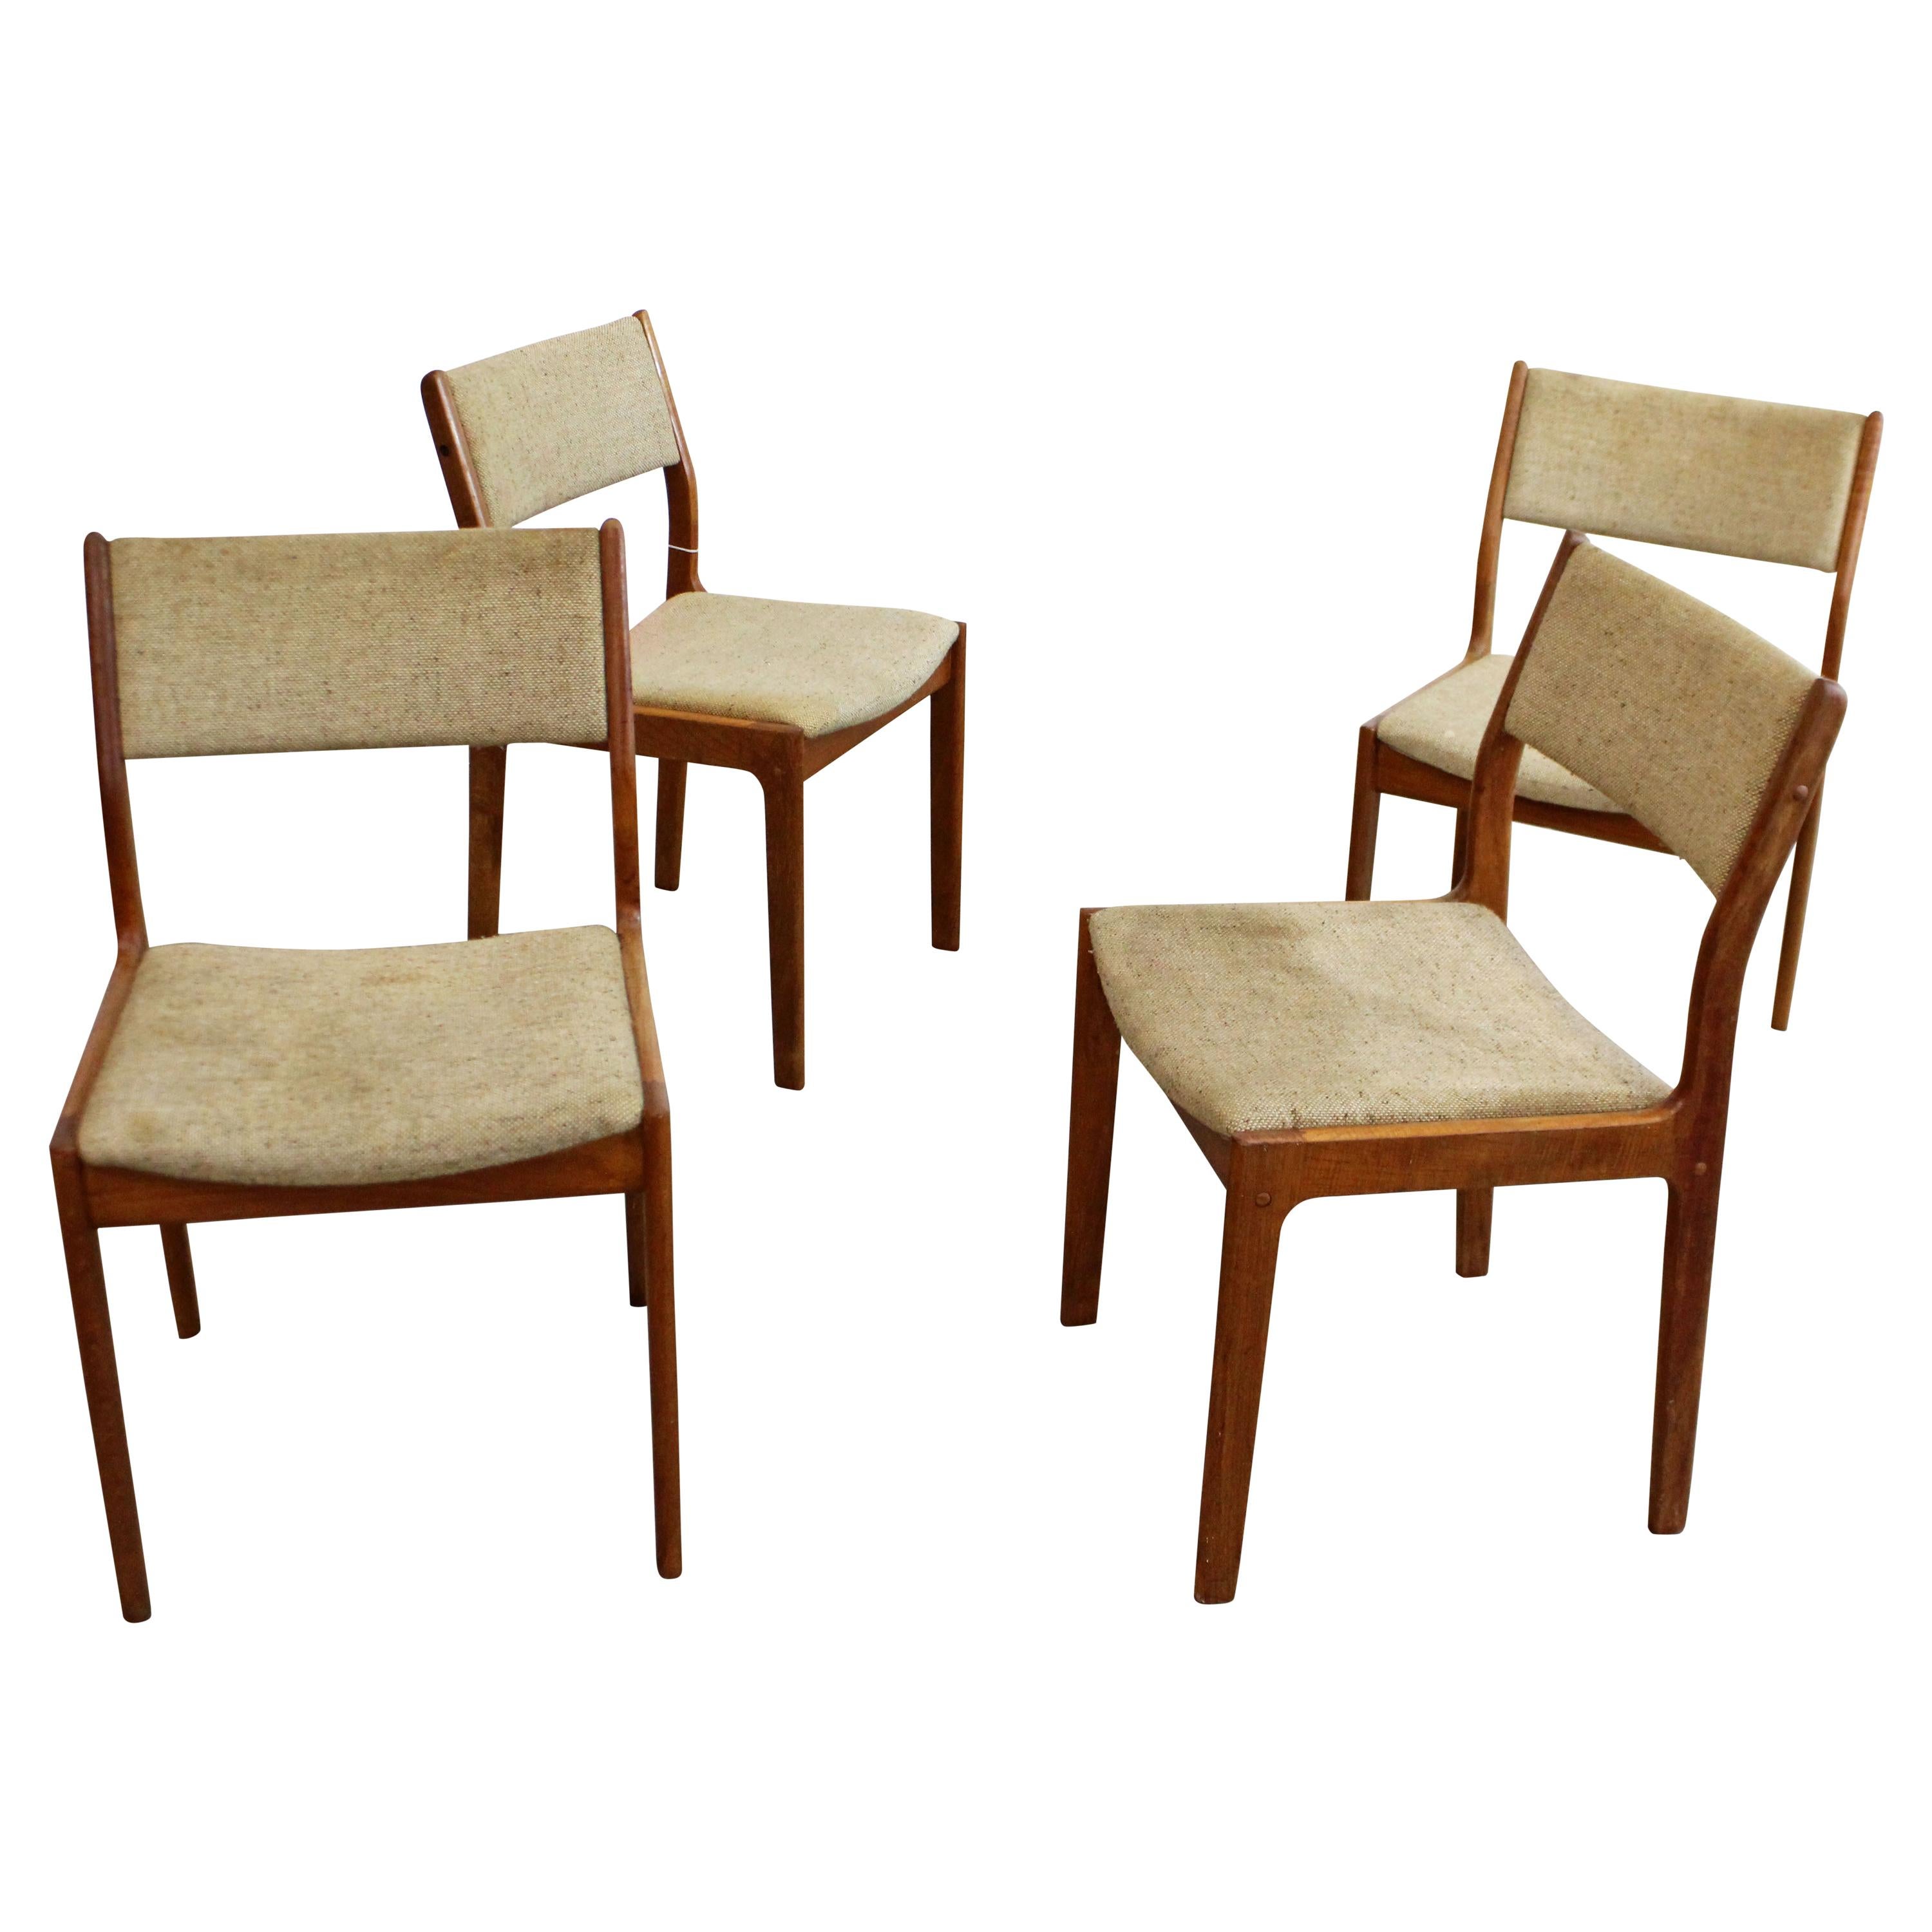 Set of 4 Mid-century Danish Modern Teak Dining Chairs